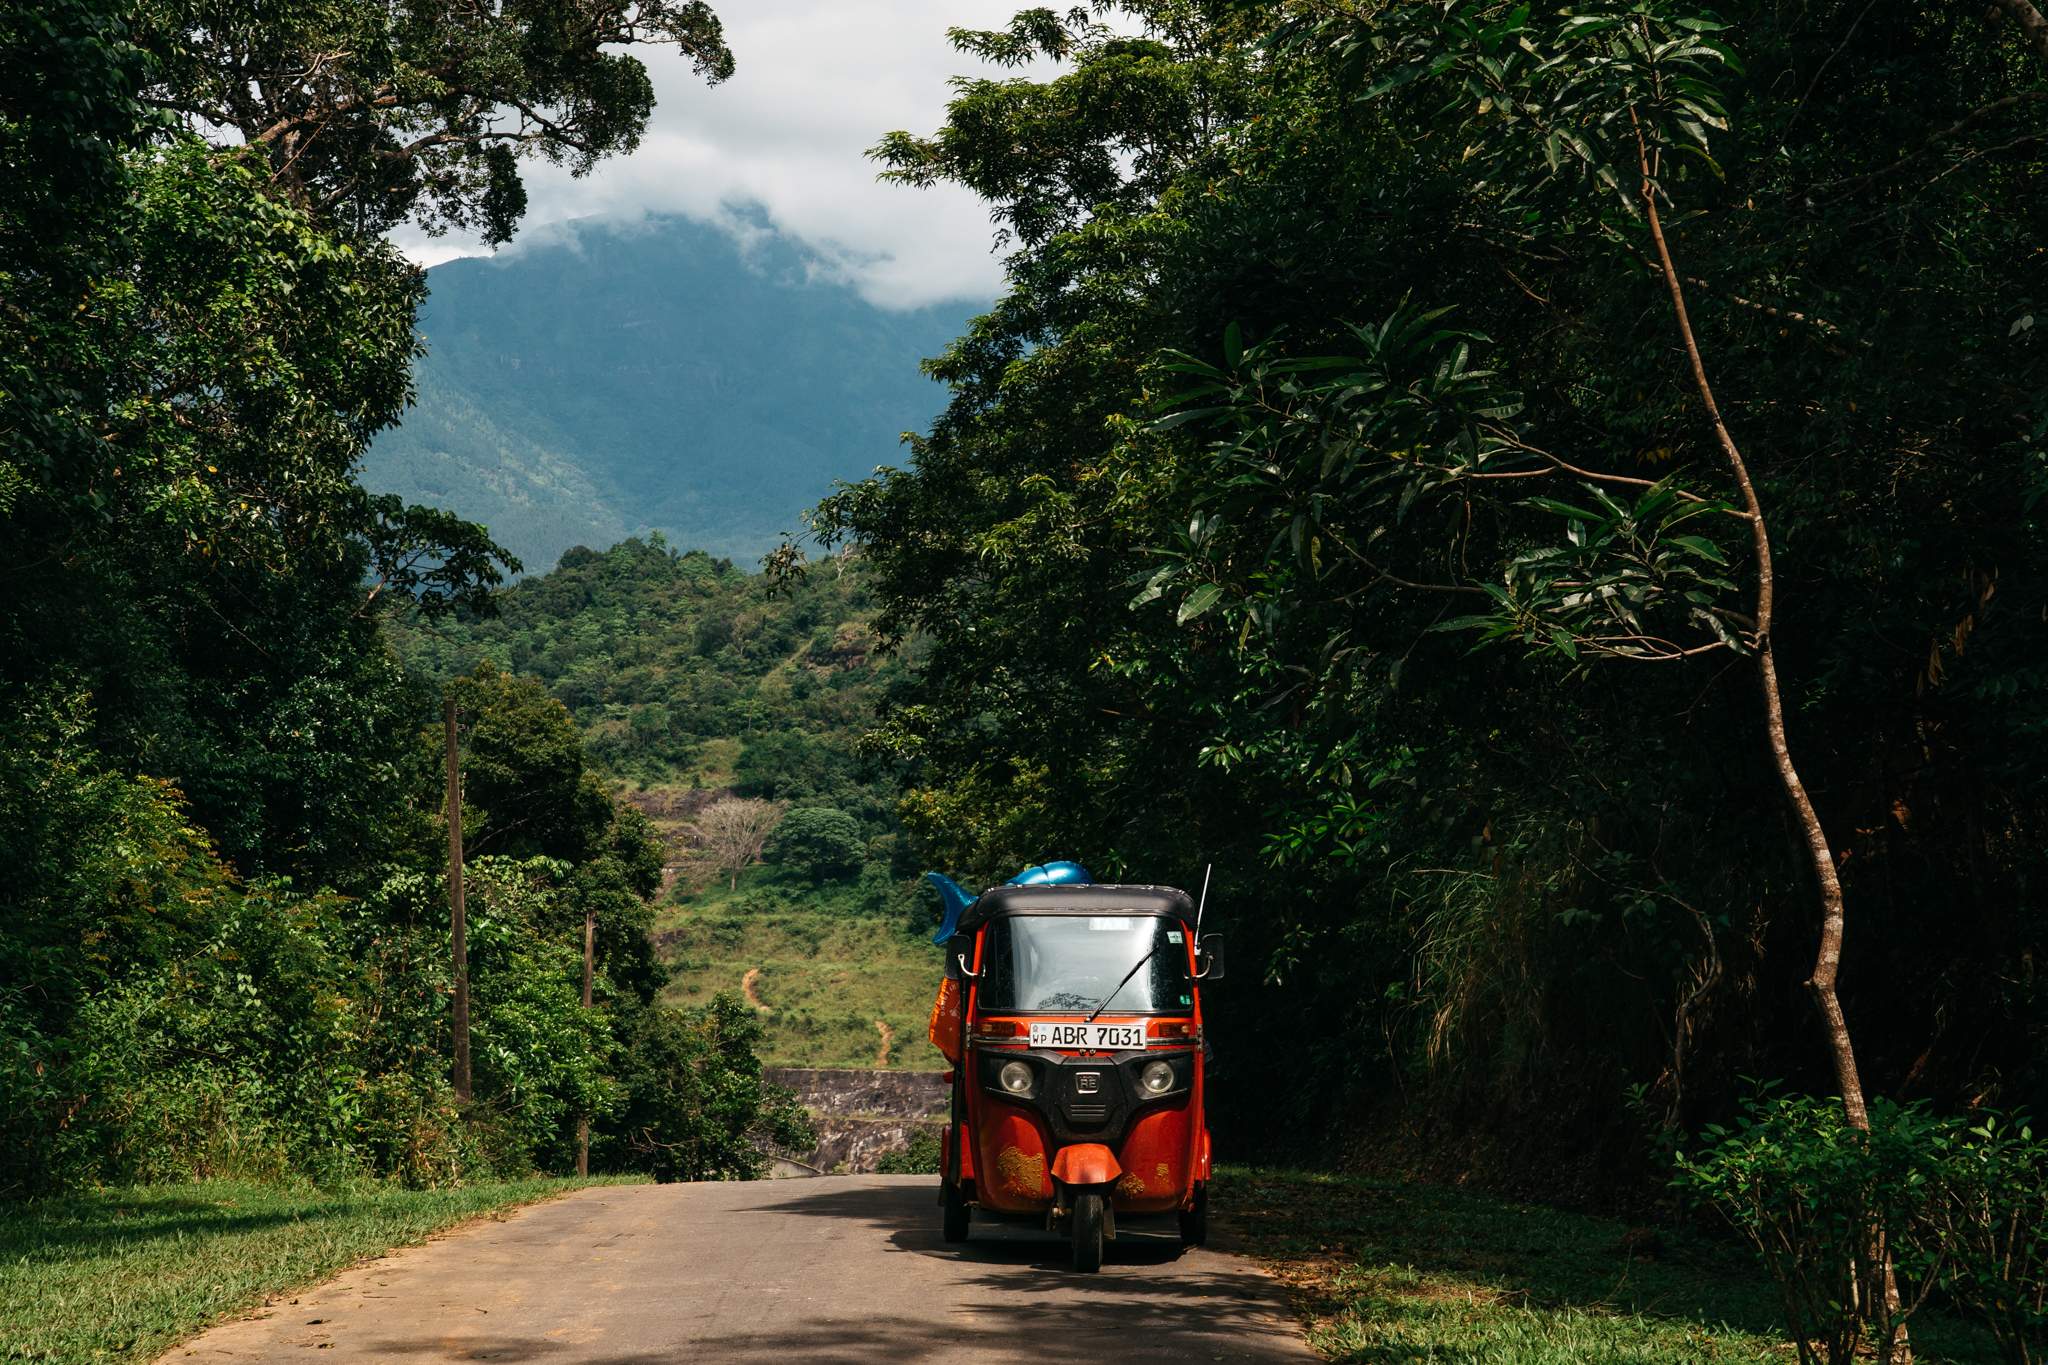 De tuktuk is het ultieme voertuig om Sri Lanka te verkennen